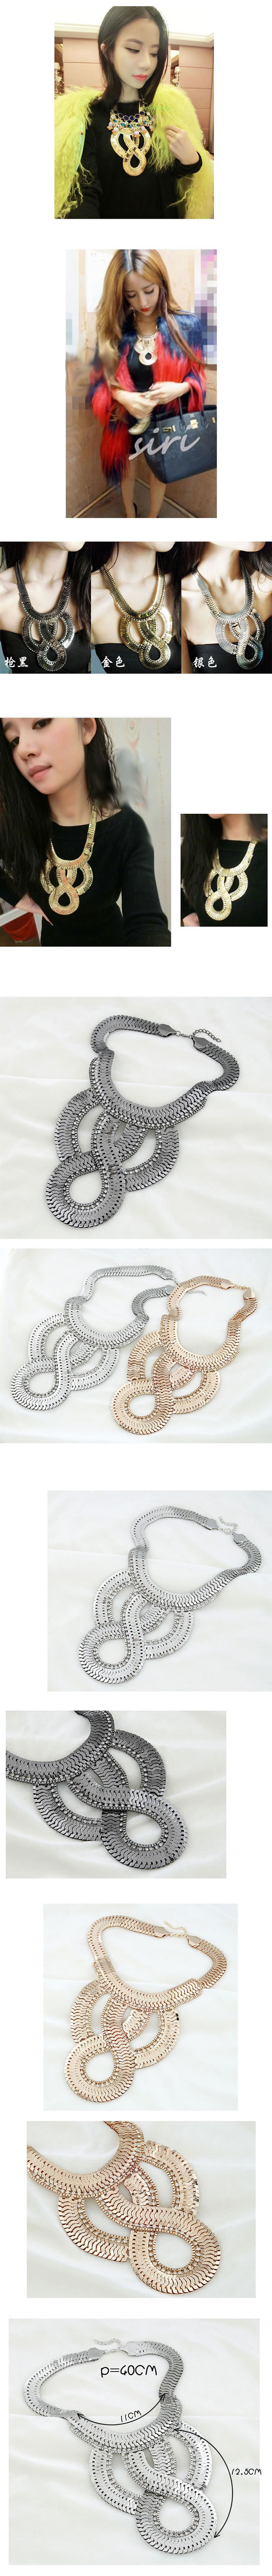 Pantsuit Gold Color Simple Weave Decorated With Cz Diamond,Bib Necklaces